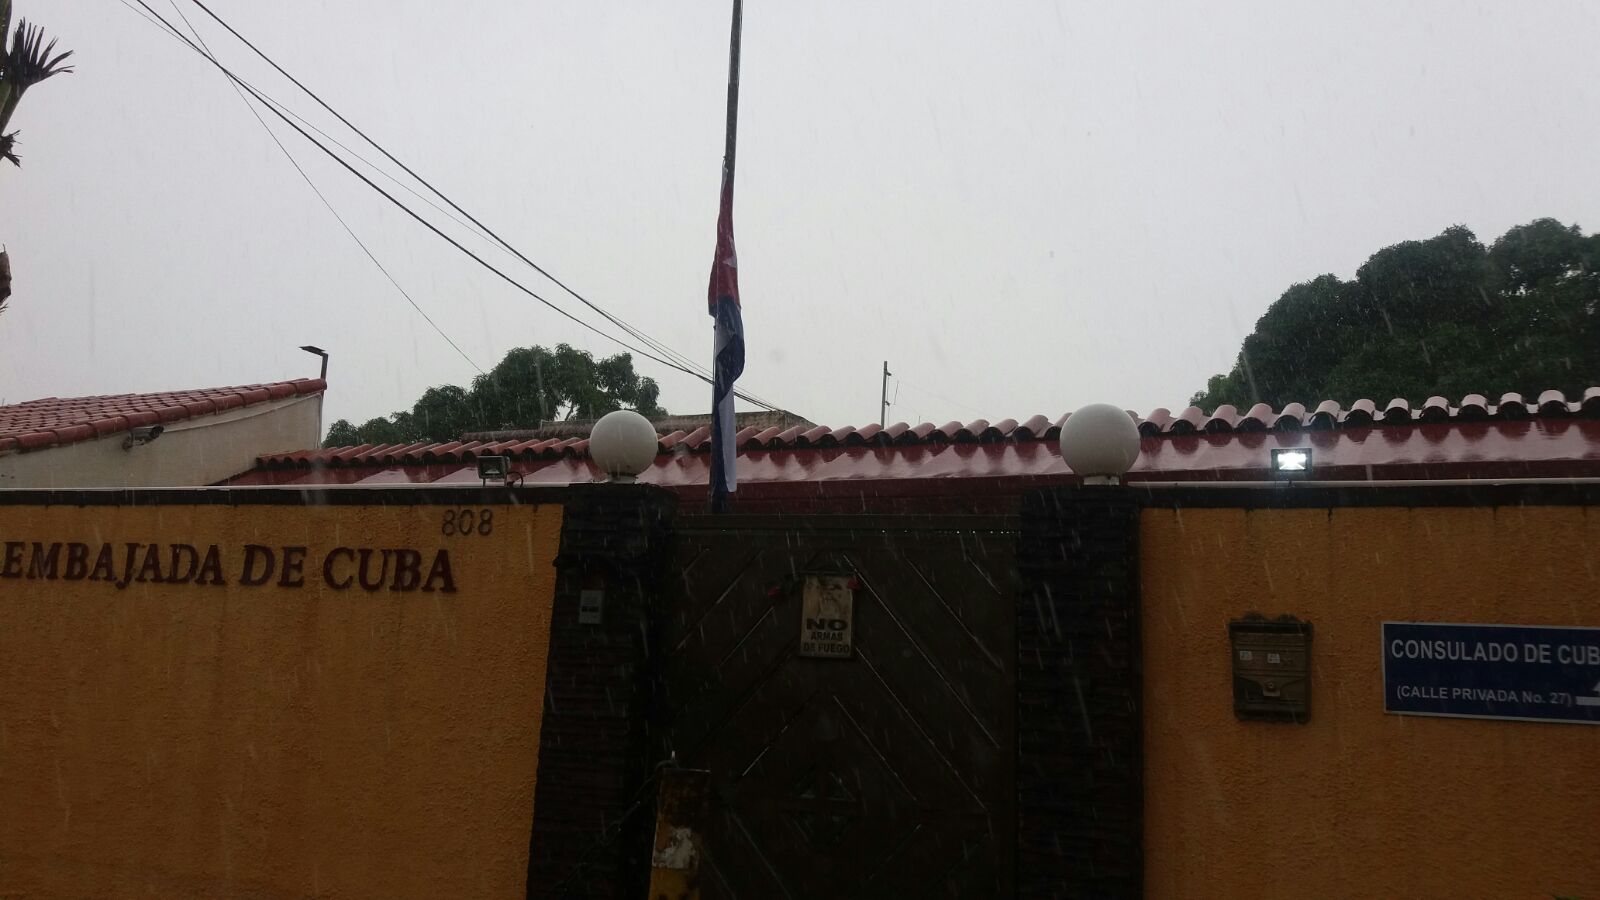 Luto: sigue a media asta bandera embajada de Cuba por muerte de Fidel